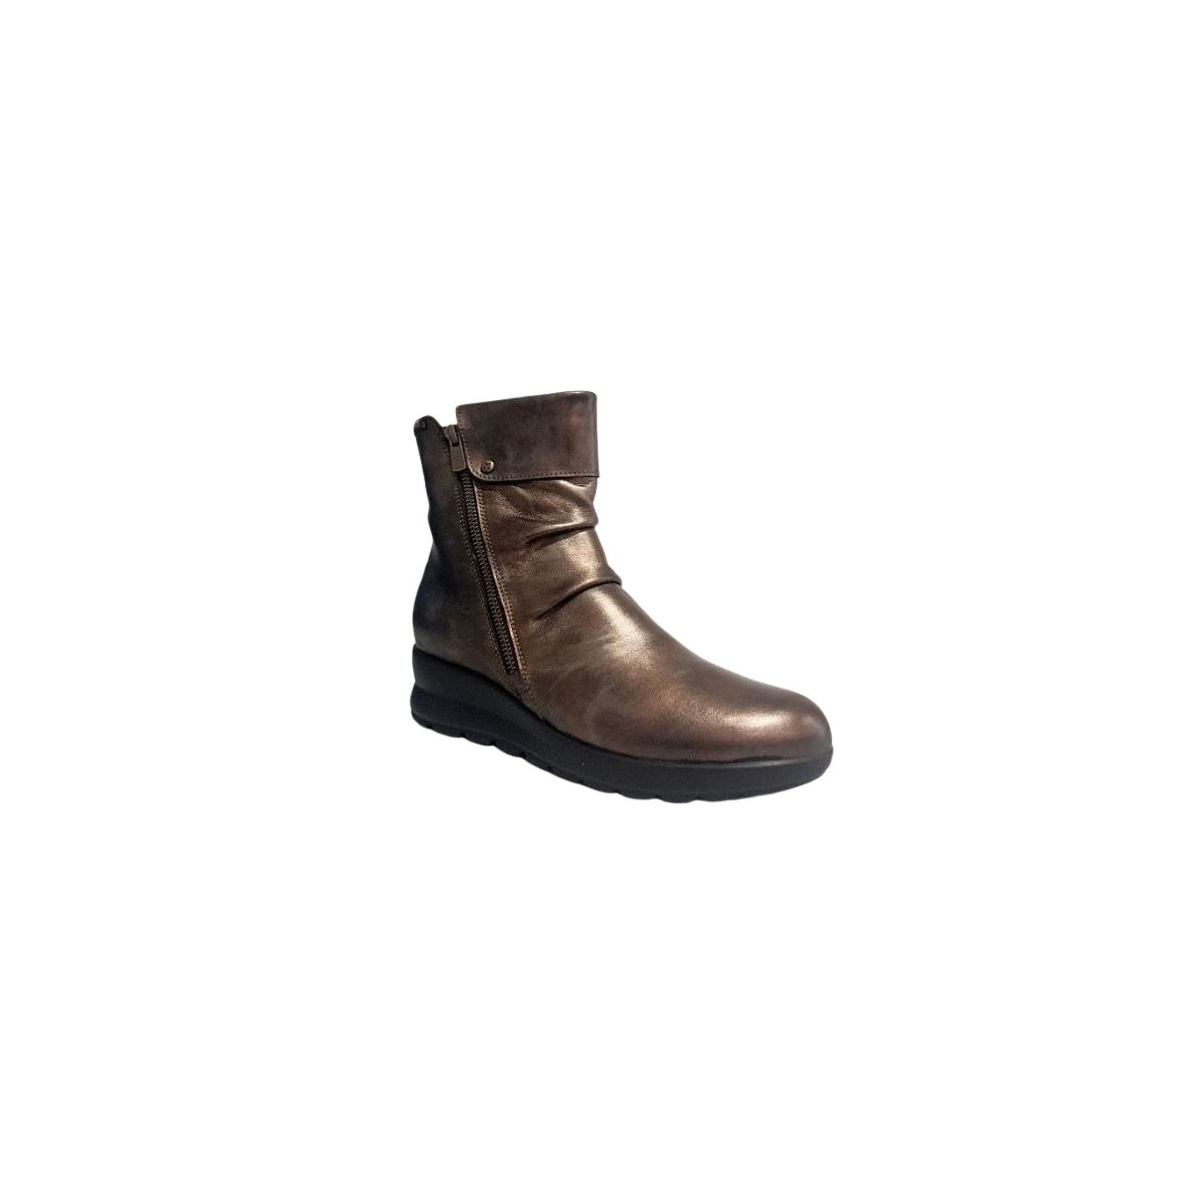 Boots phila